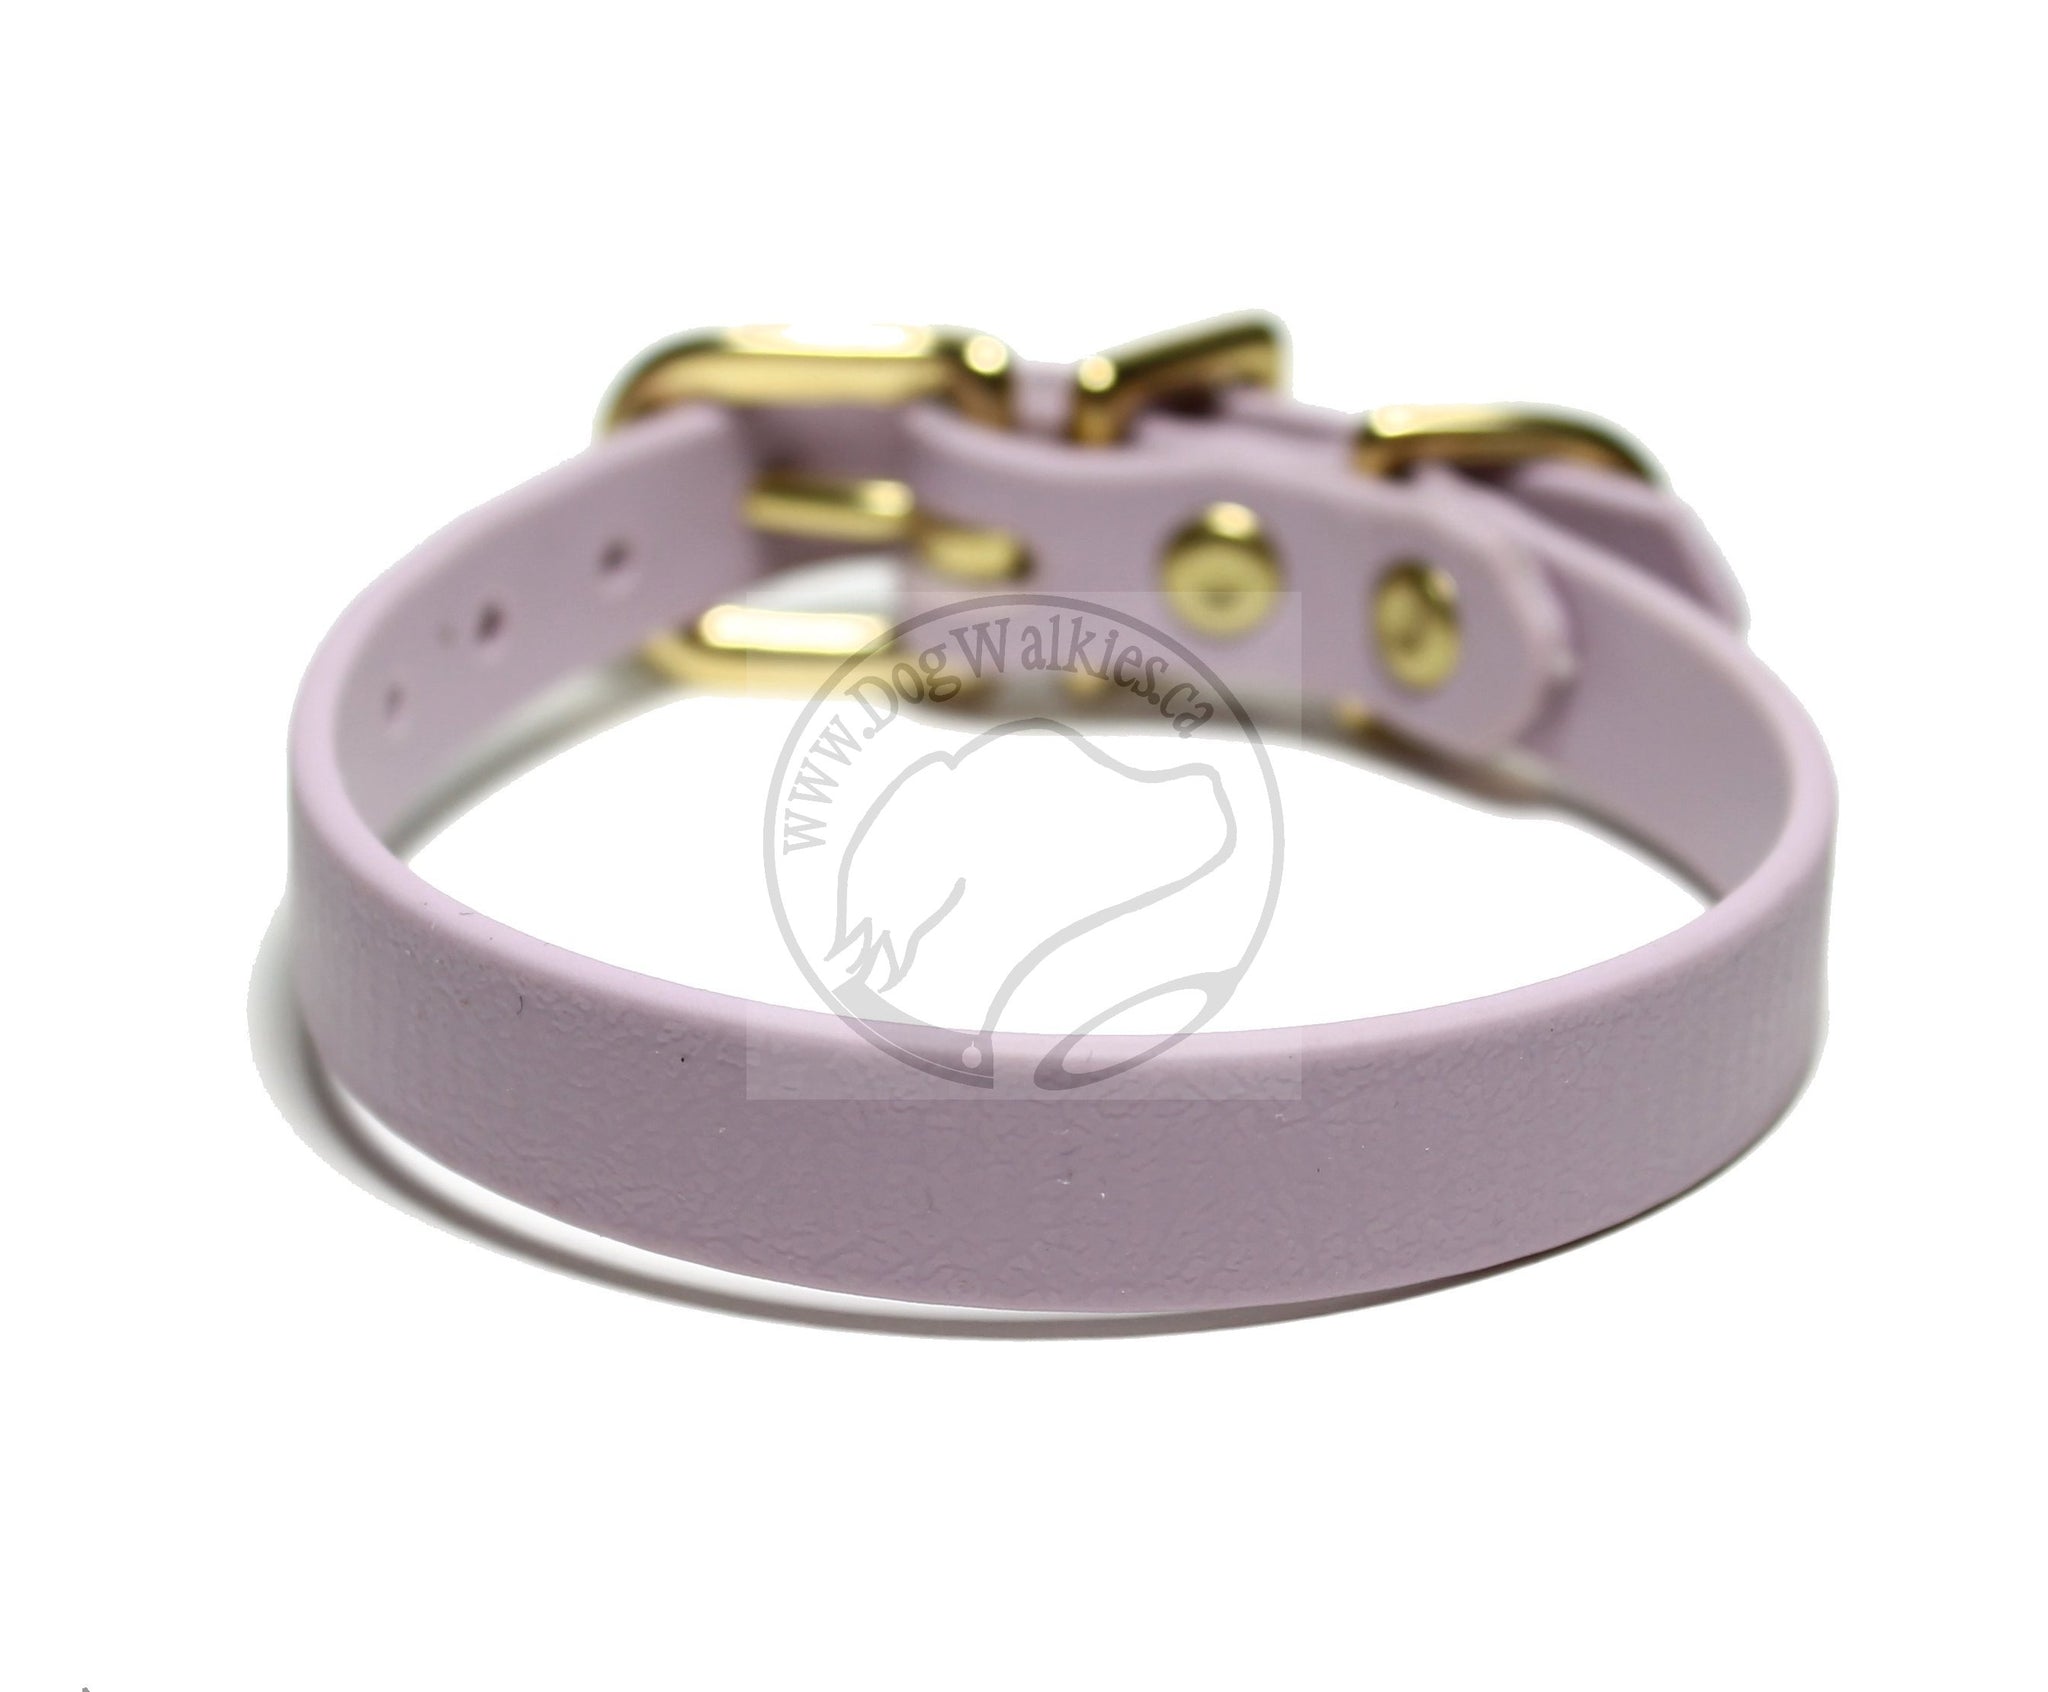 Lavender Purple Pastel Biothane Small Dog Collar - 1/2" (12mm) wide